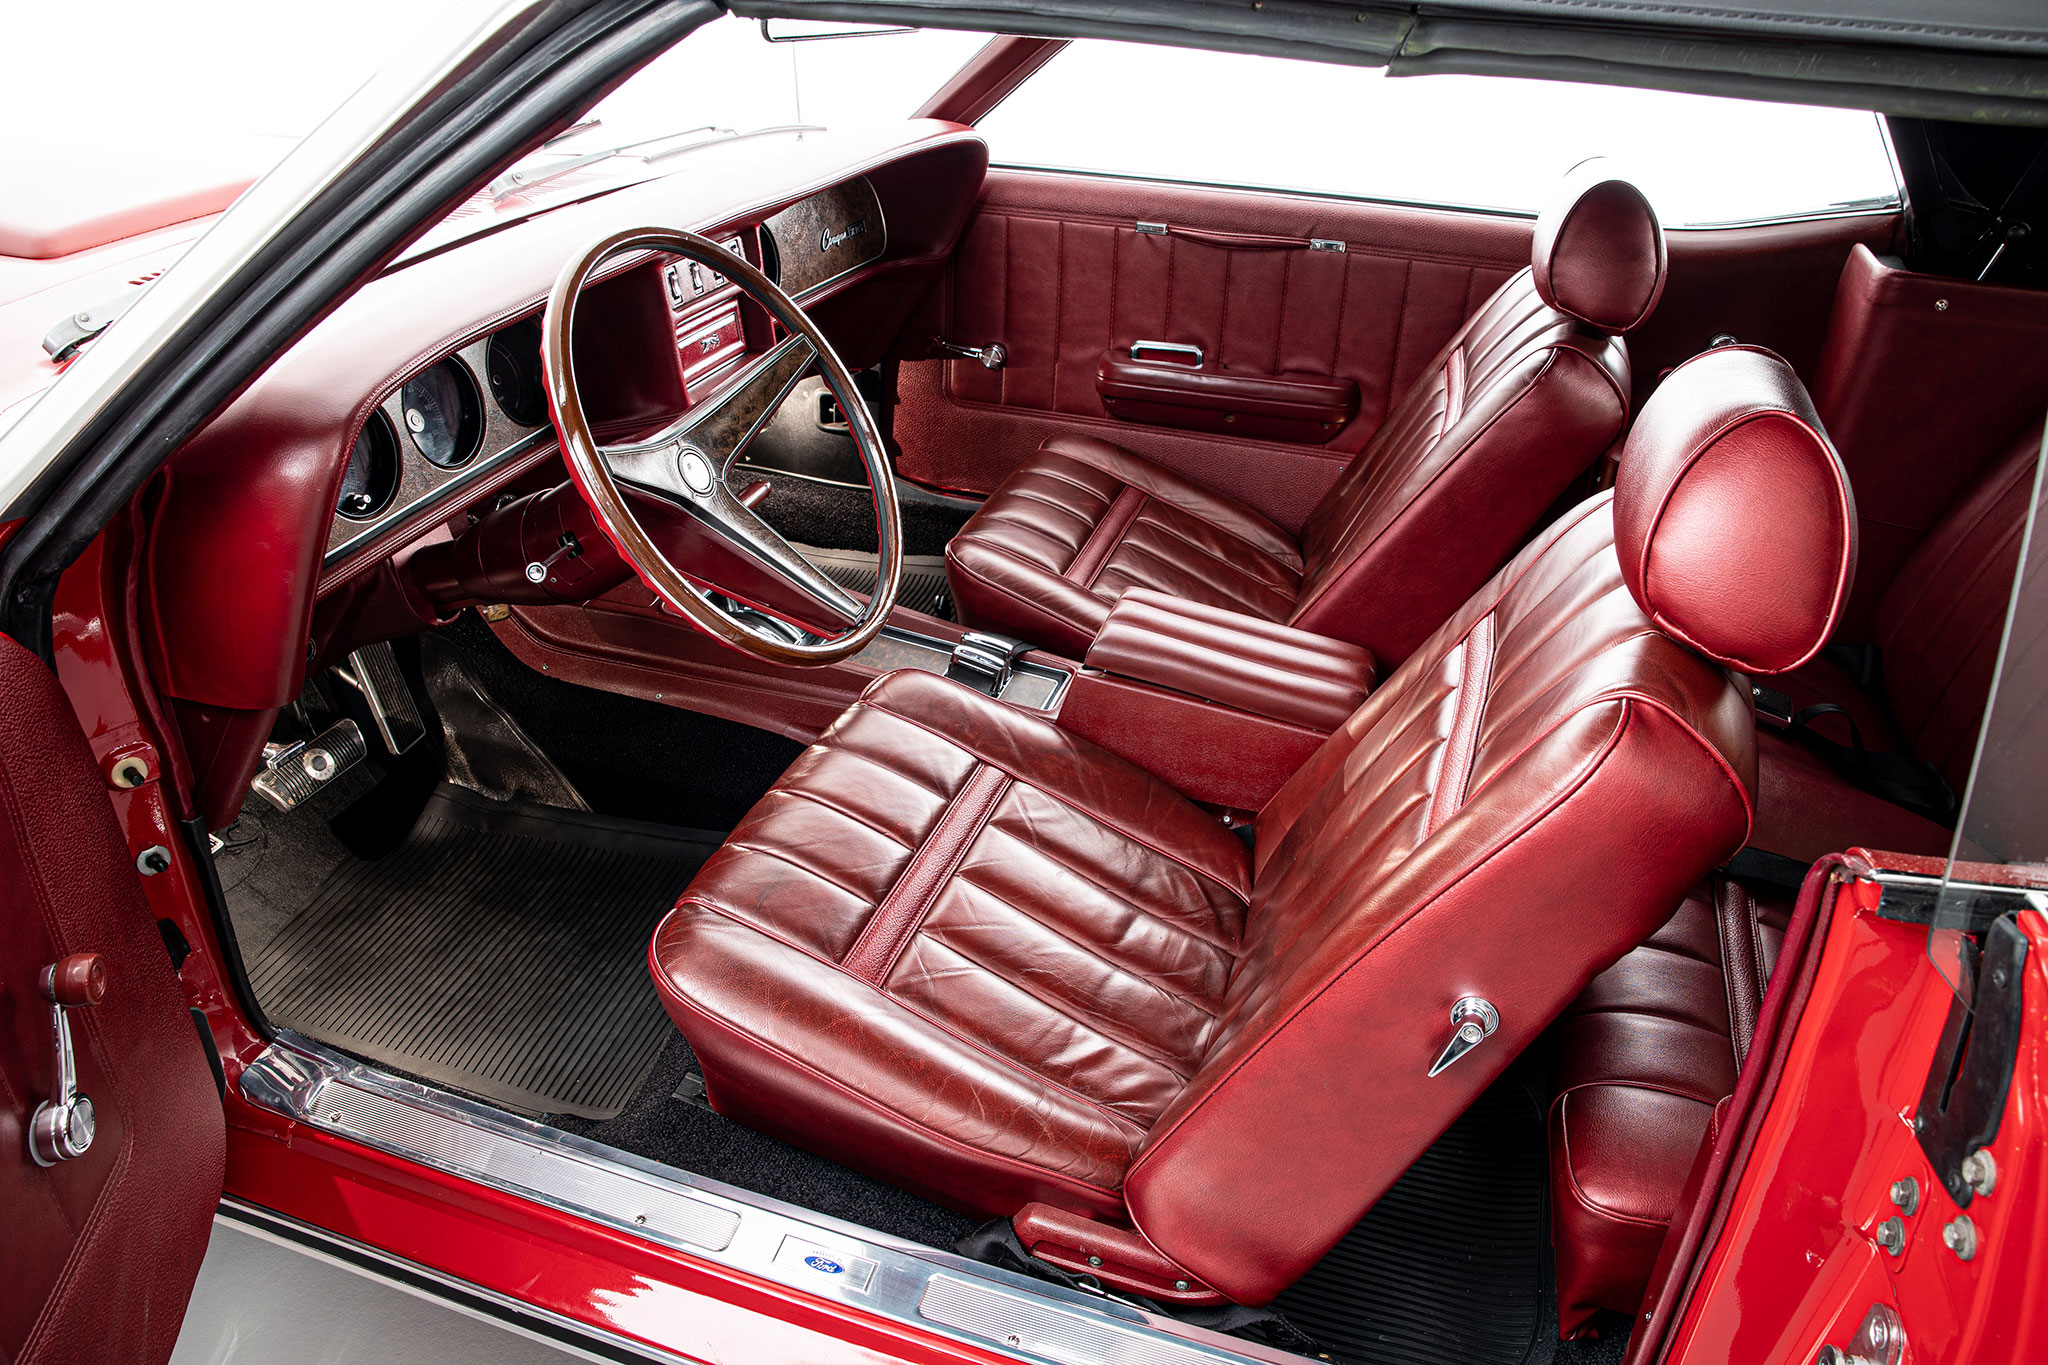 1969 Mercury Cougar XR7 intérieur en cuir rouge - Bonhams Bond Street Sale